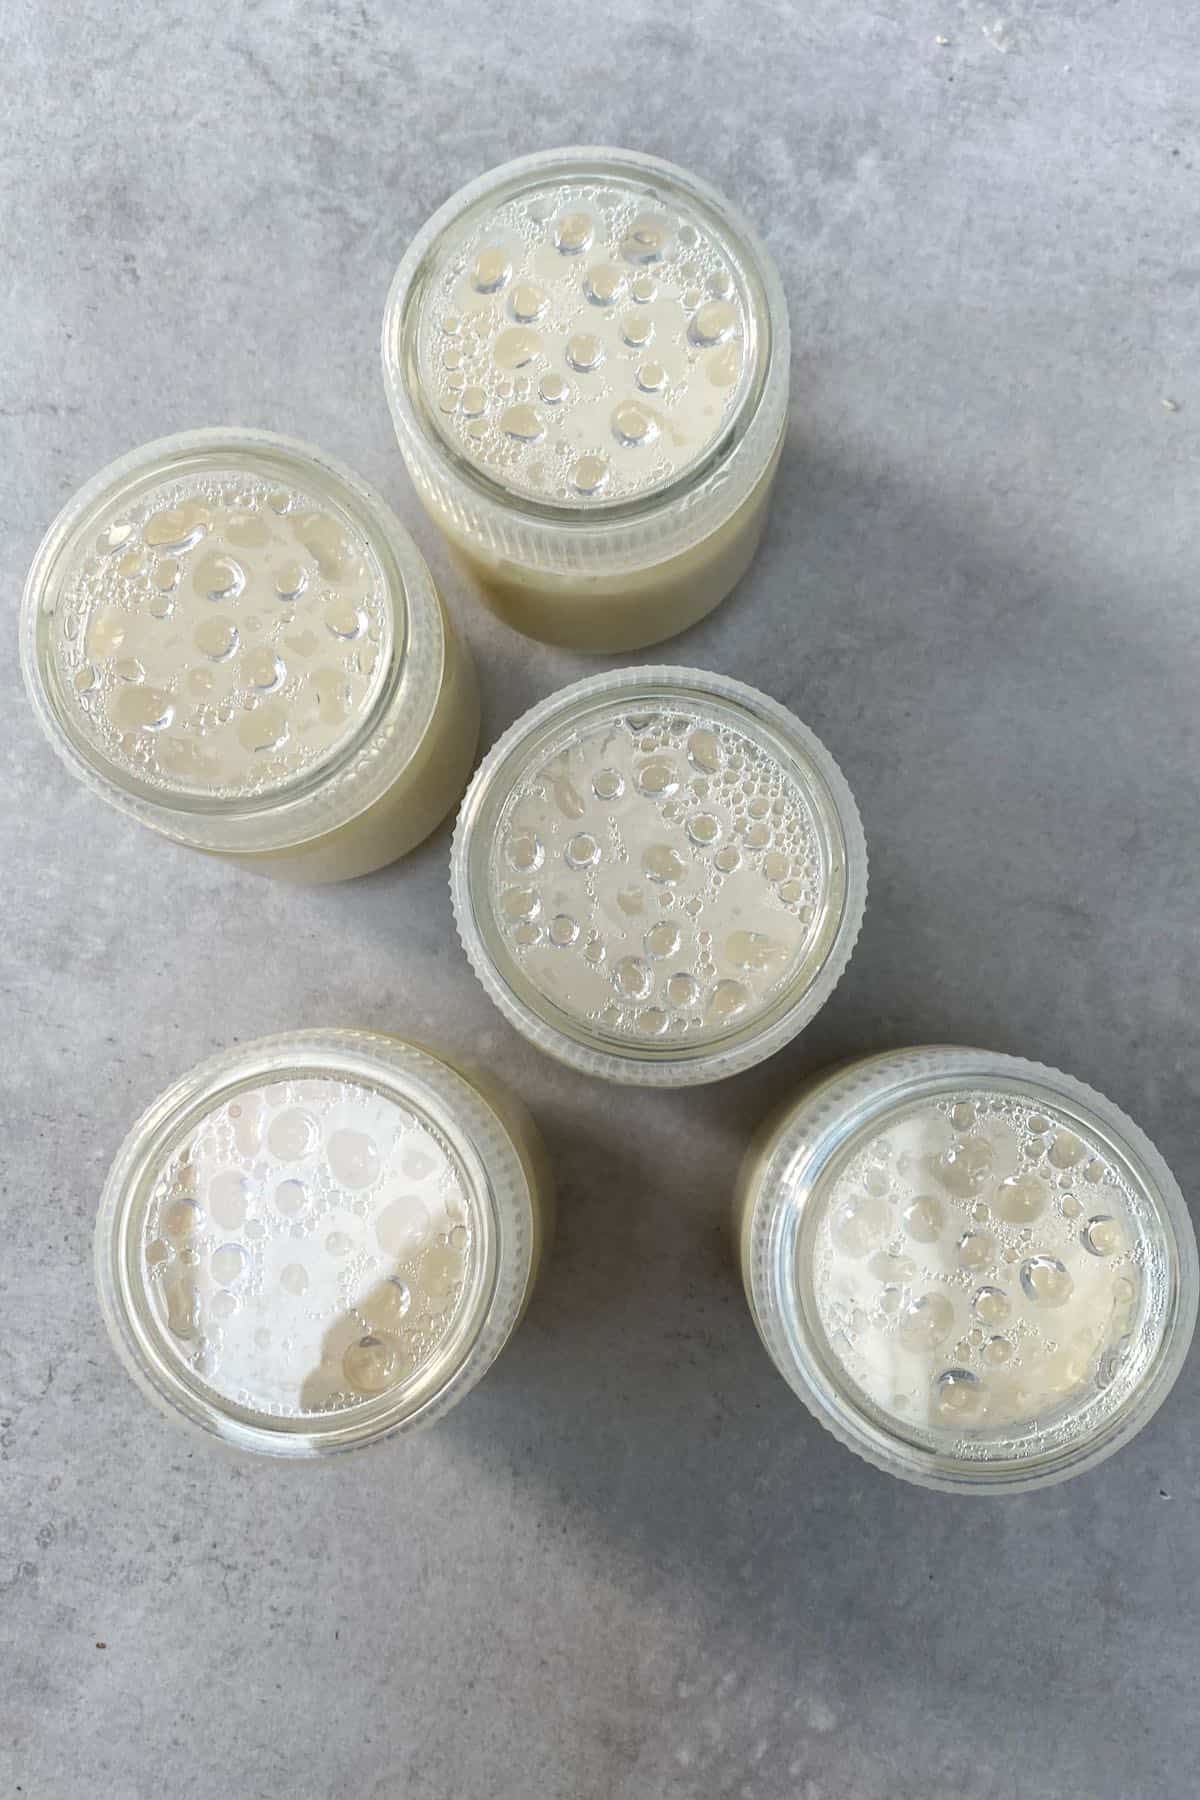 Five little jars with soy yogurt